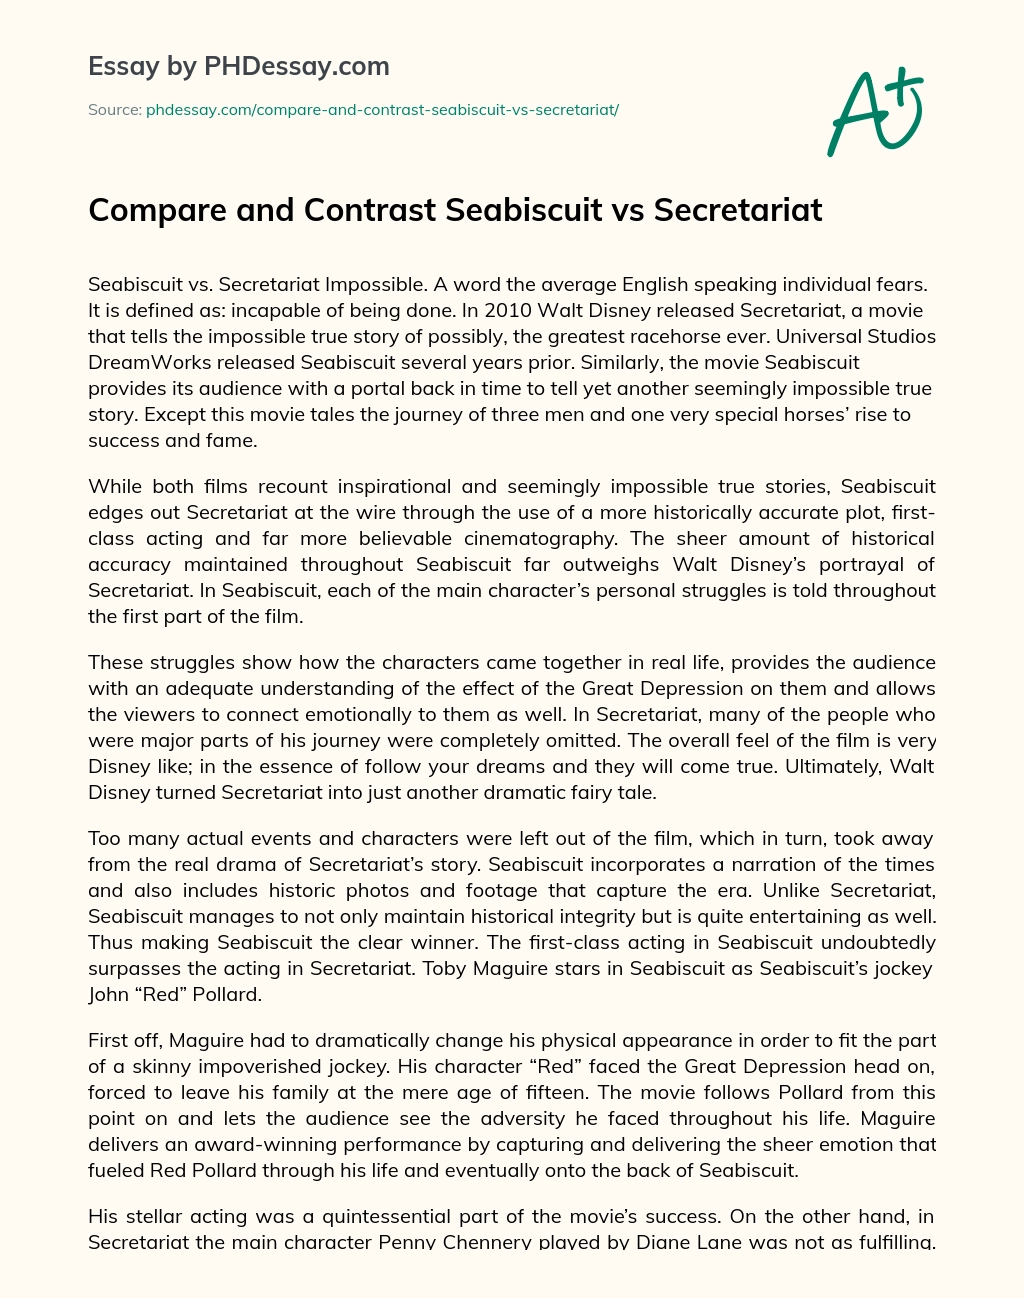 Compare and Contrast Seabiscuit vs Secretariat essay